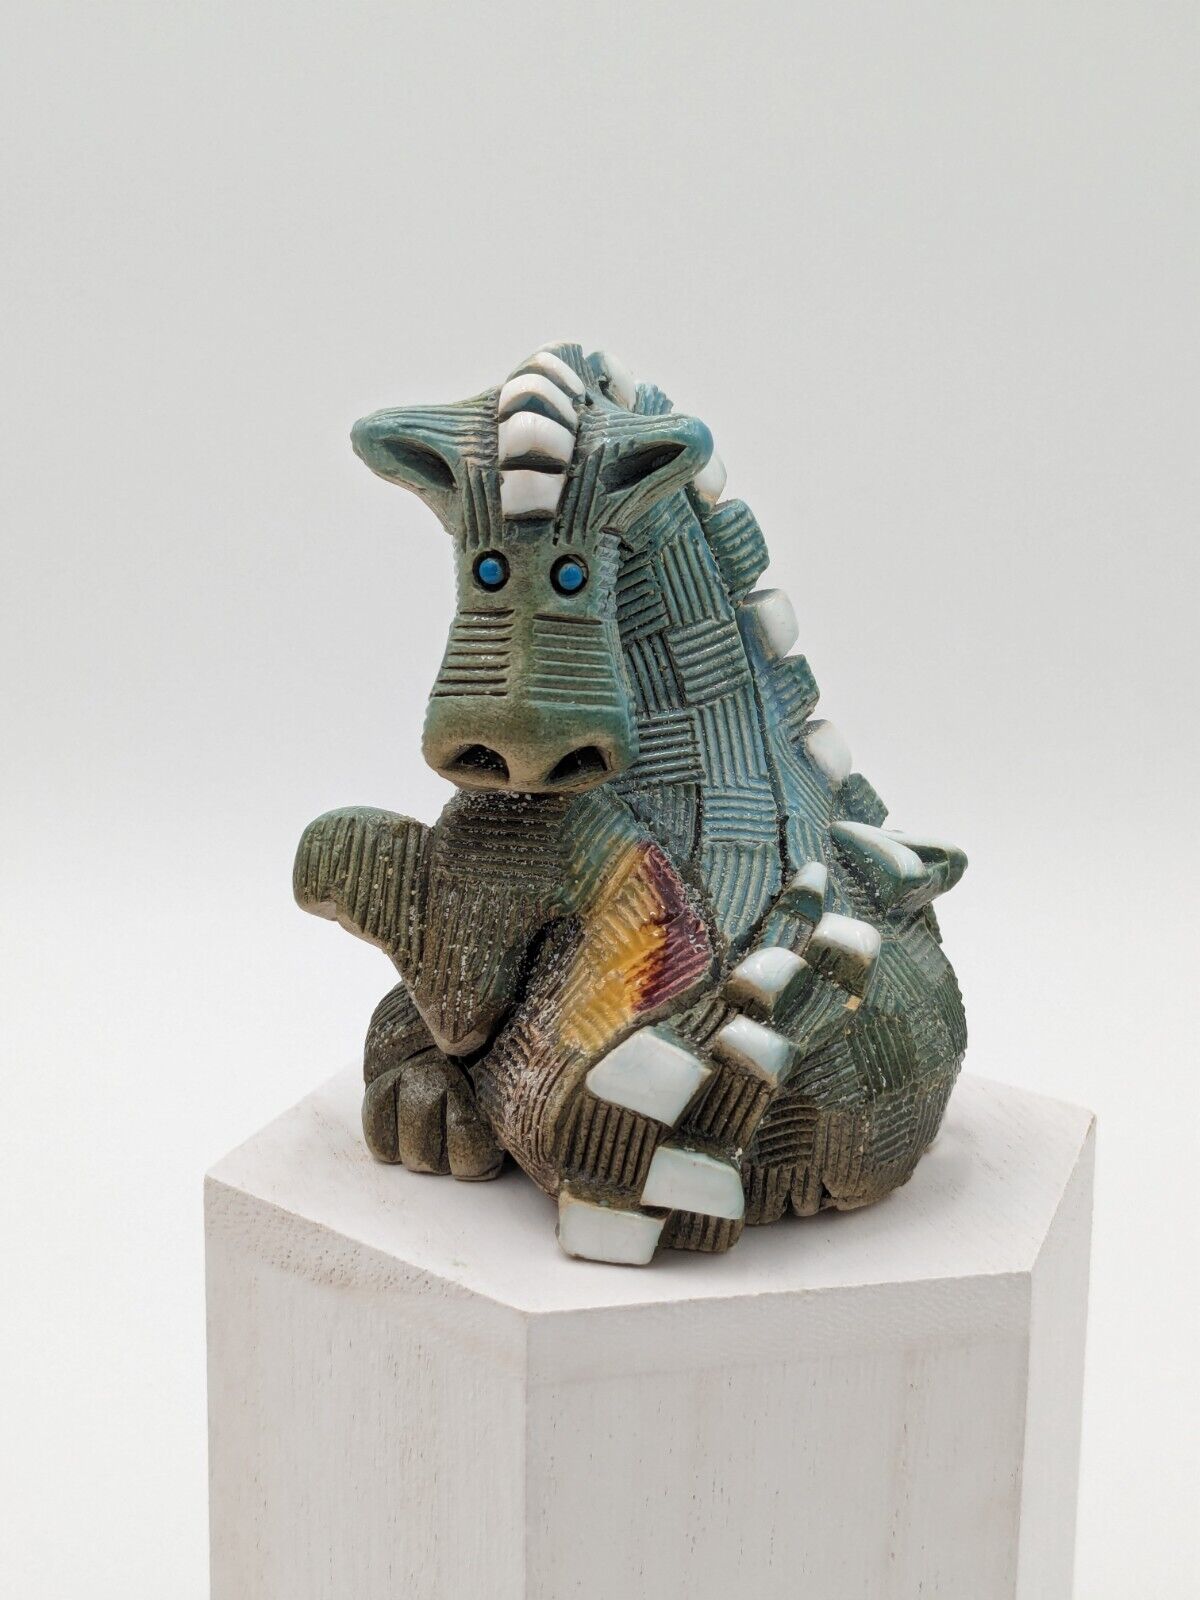 Vintage Artisania Rinconada Ceramic Dragon Figurine #252